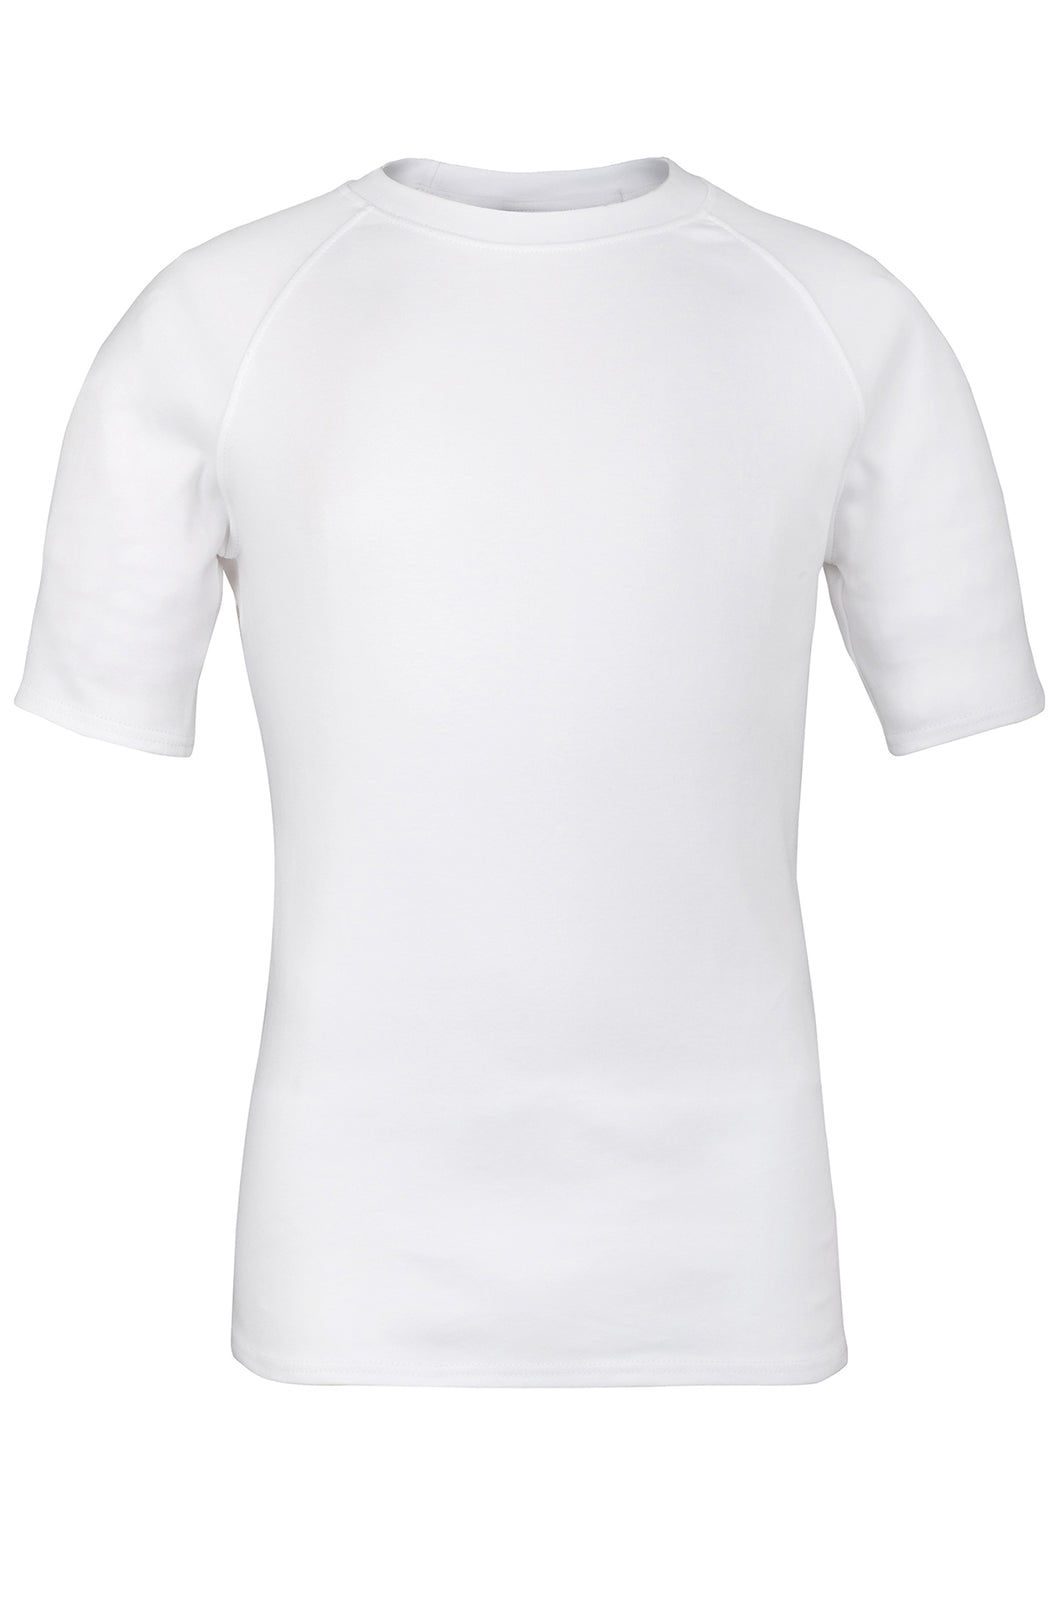 RAGLAN TEE - WHITE, T-Shirt - ROE